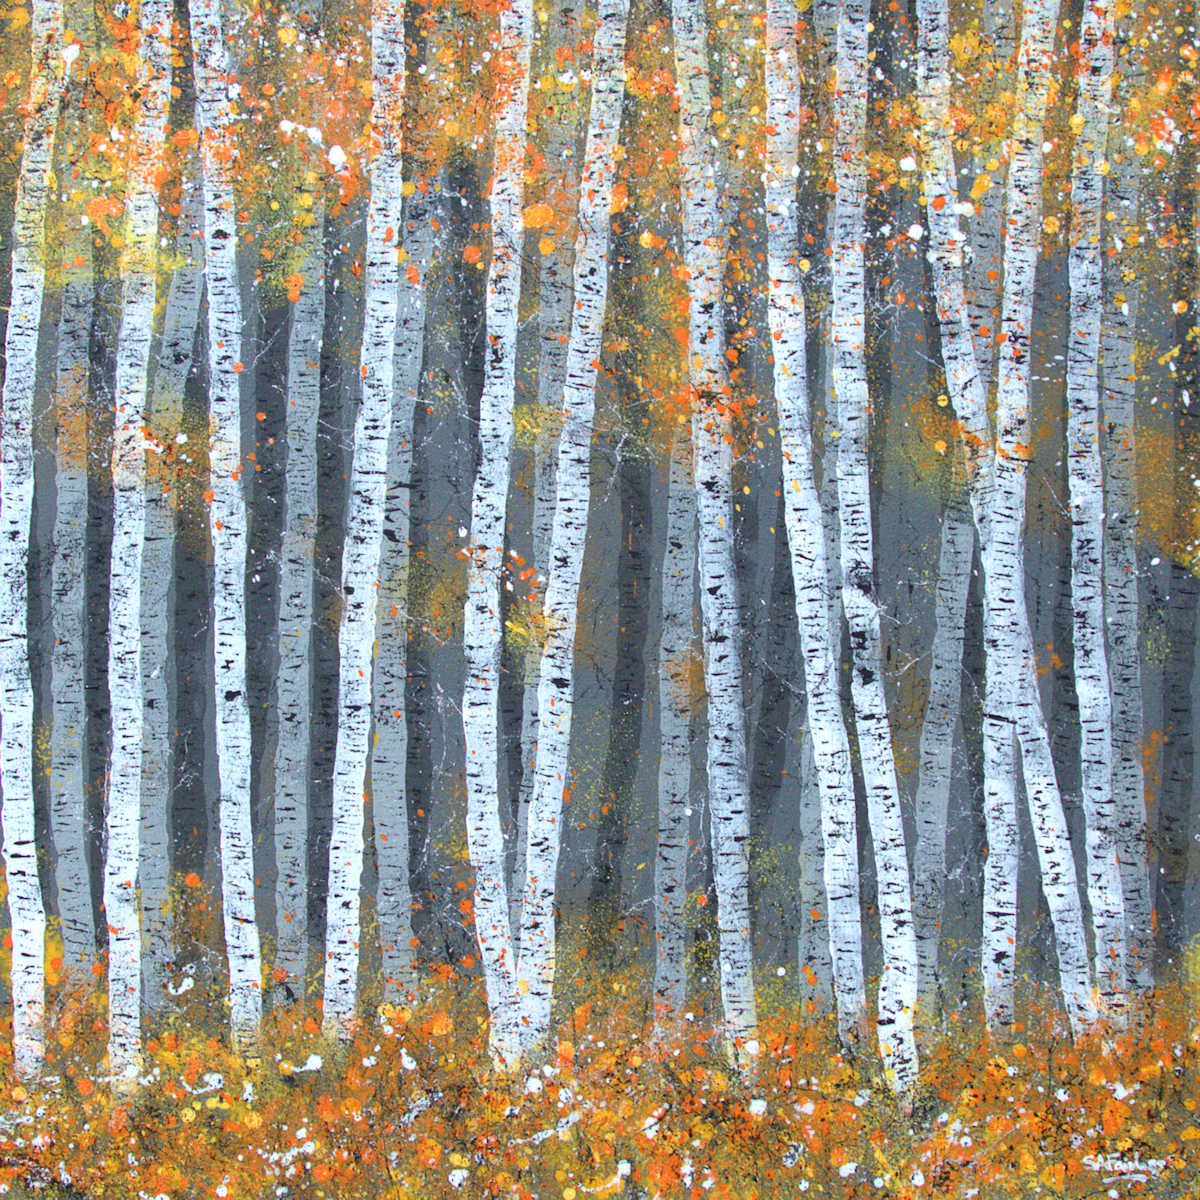 Silver birch trees in autumn